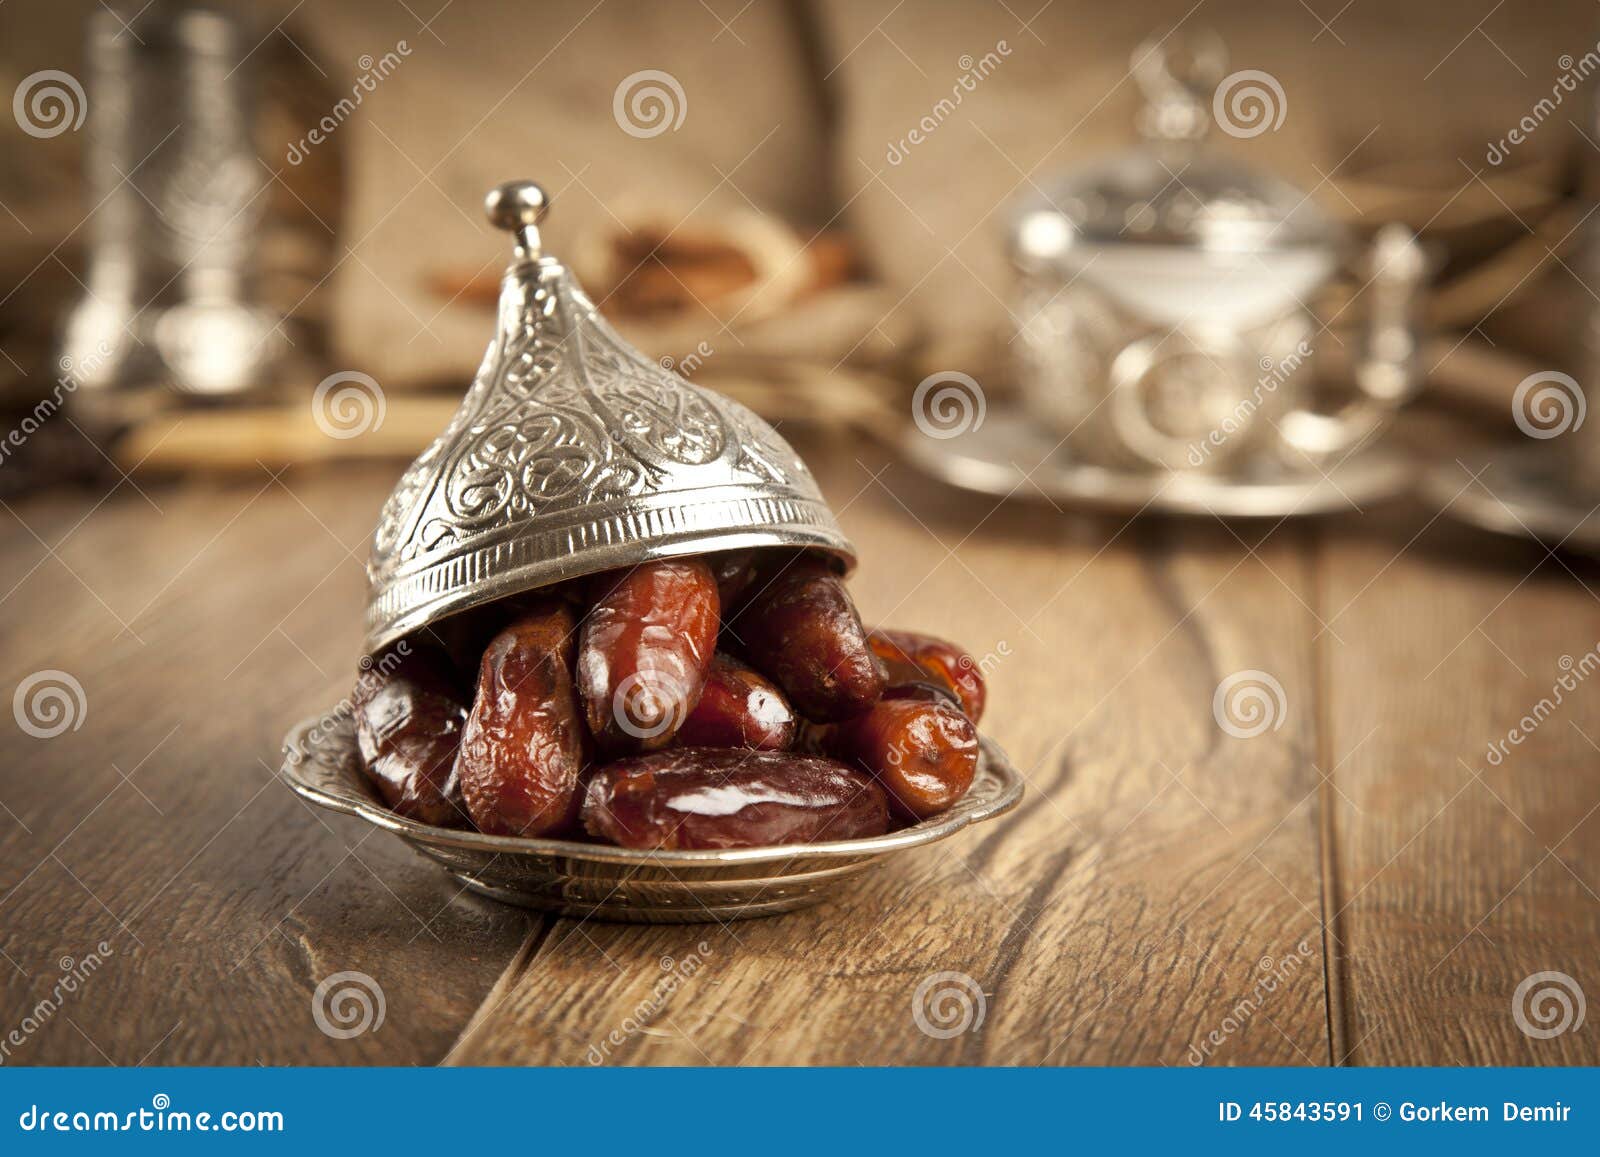 dried date palm fruits or kurma, ramadan ( ramazan ) food